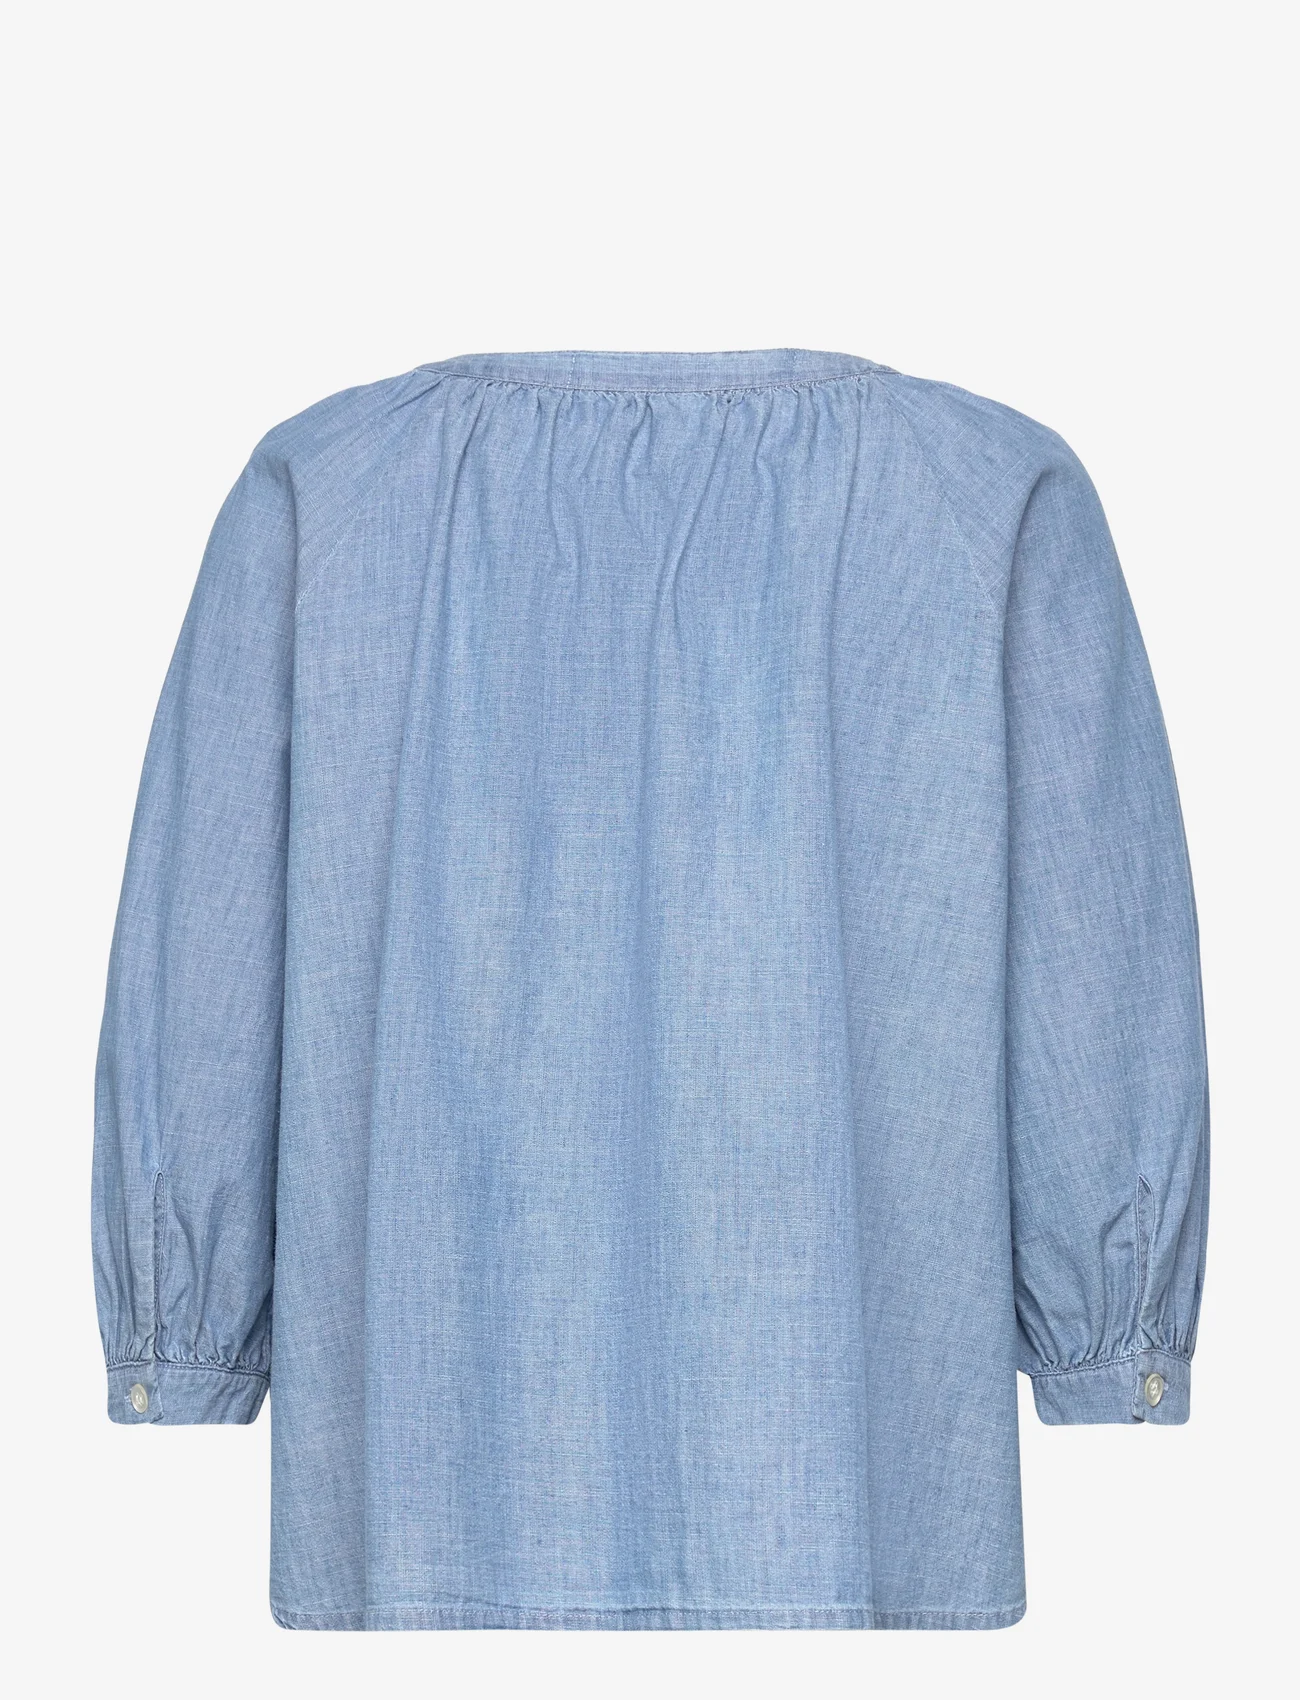 Pieszak - PD-Lola Lonnie Boheme Shirt Fine De - jeansskjortor - denim blue - 1